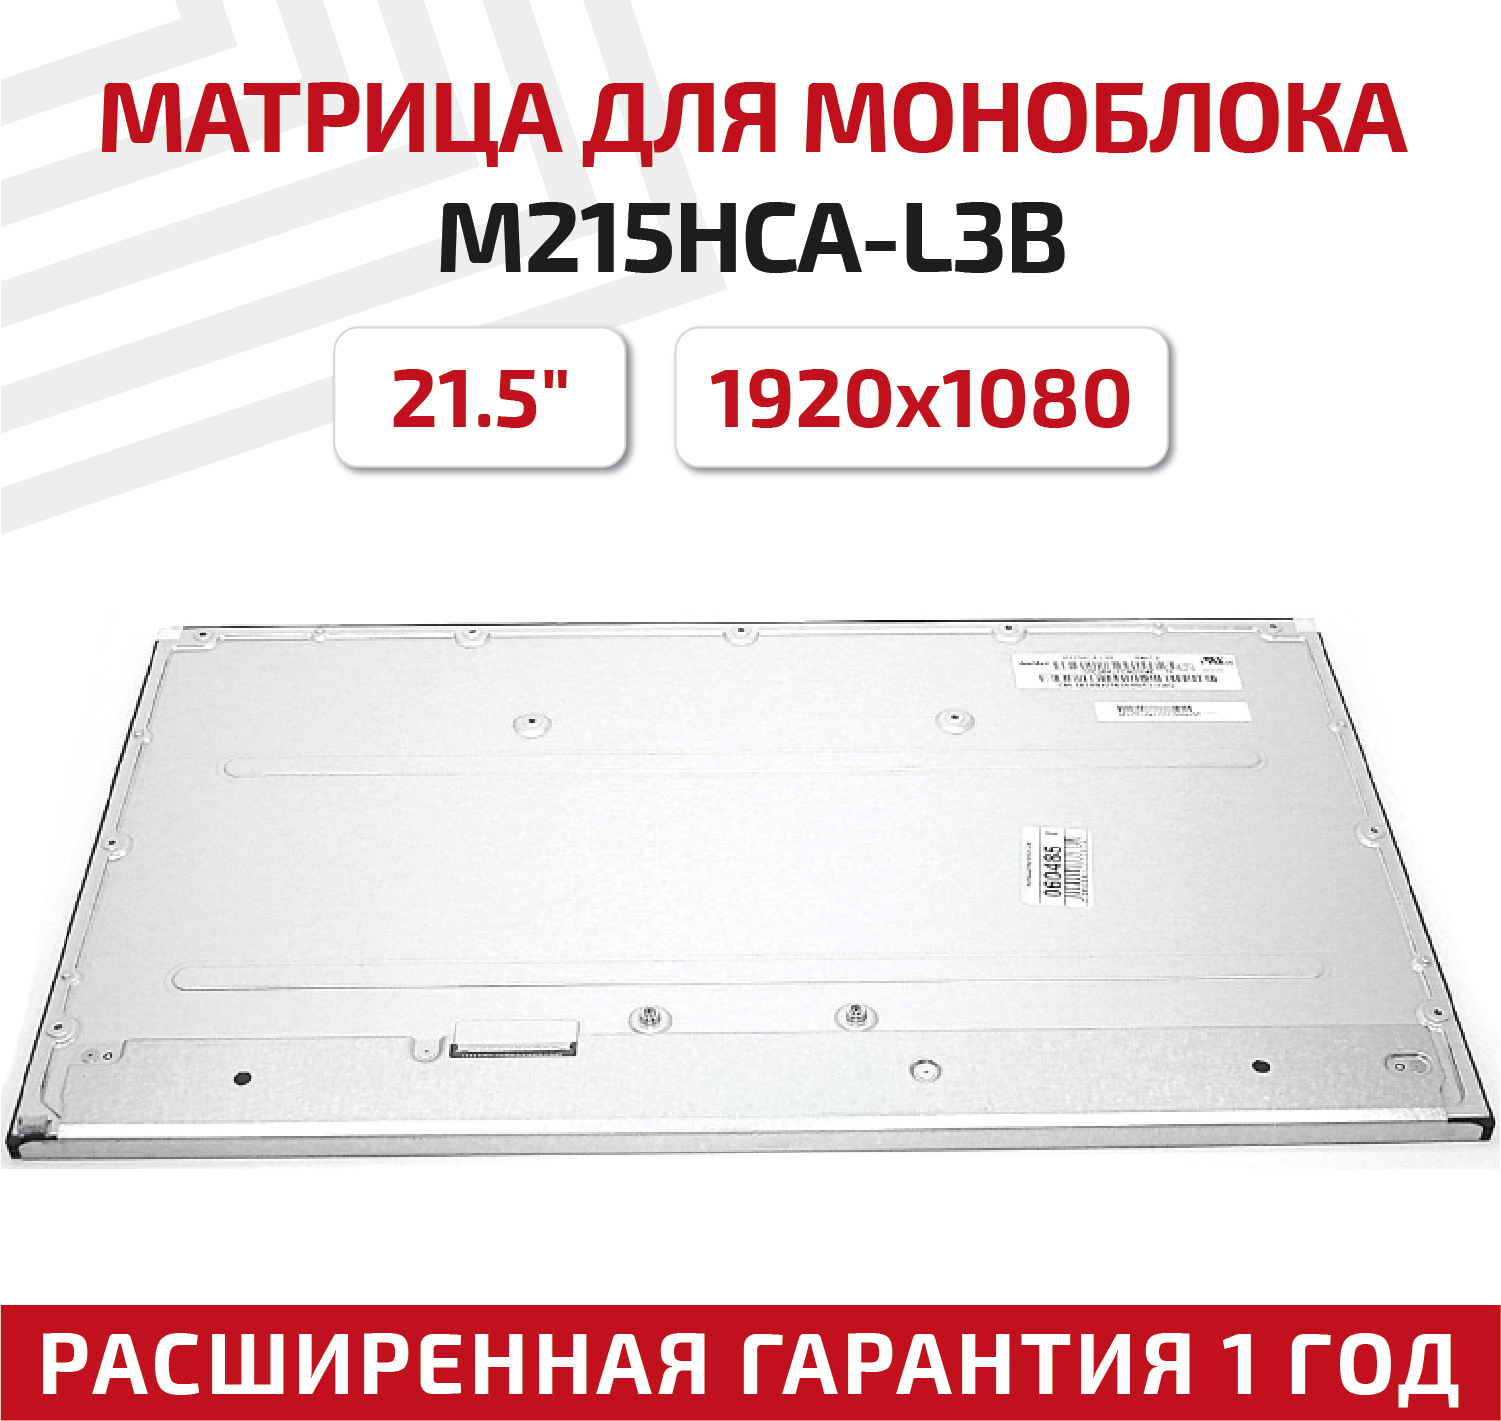 Матрица для моноблока M215HCA-L3B 21.5" 1920x1080 30pin светодиодная (LED) матовая